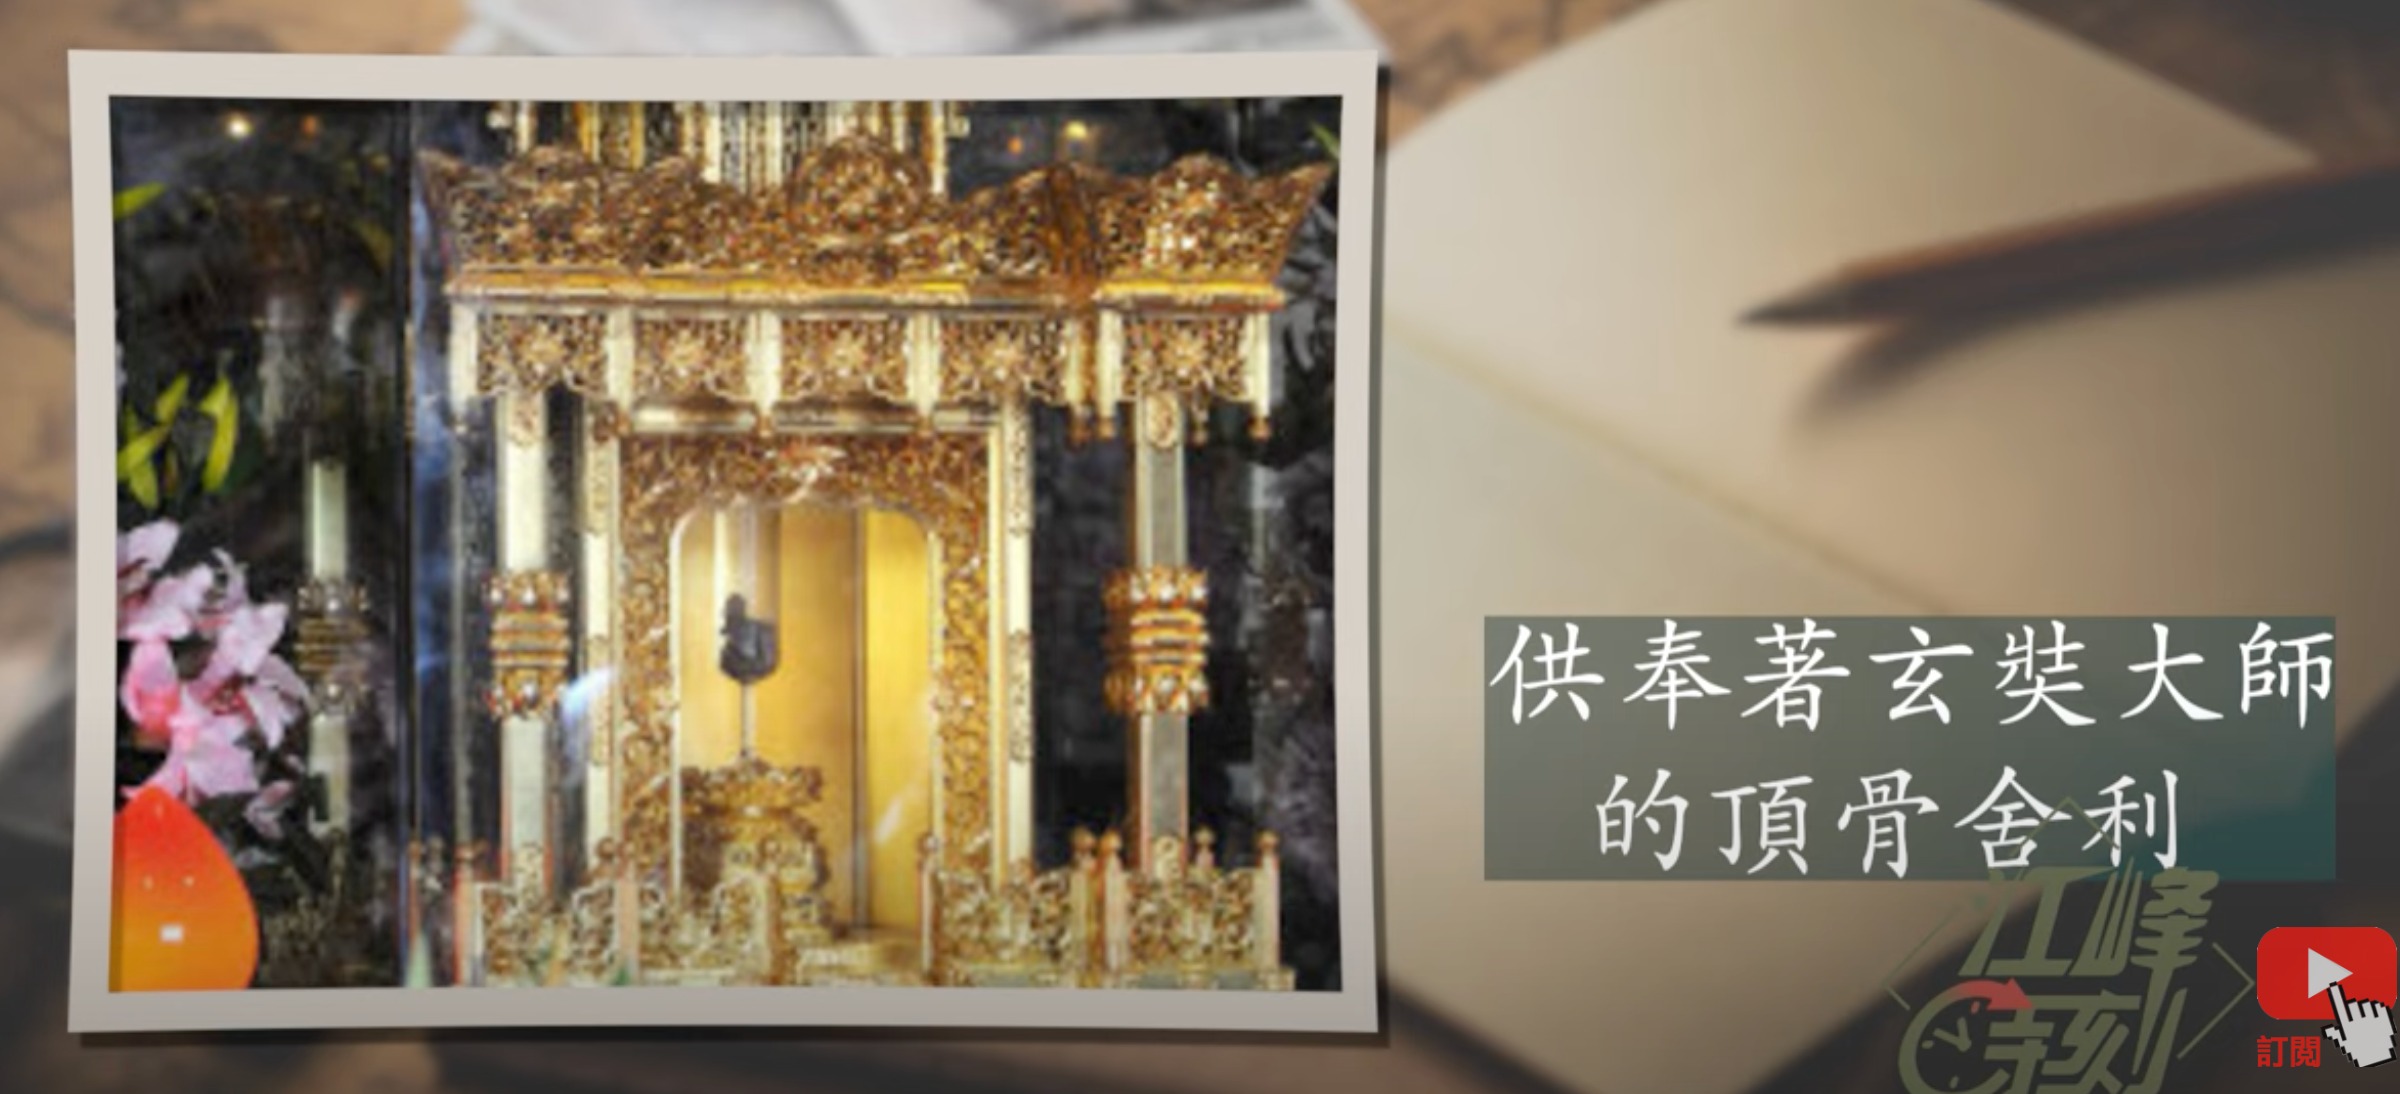 Xuanzang Temple offers the parietal bone relic of Master Xuanzang